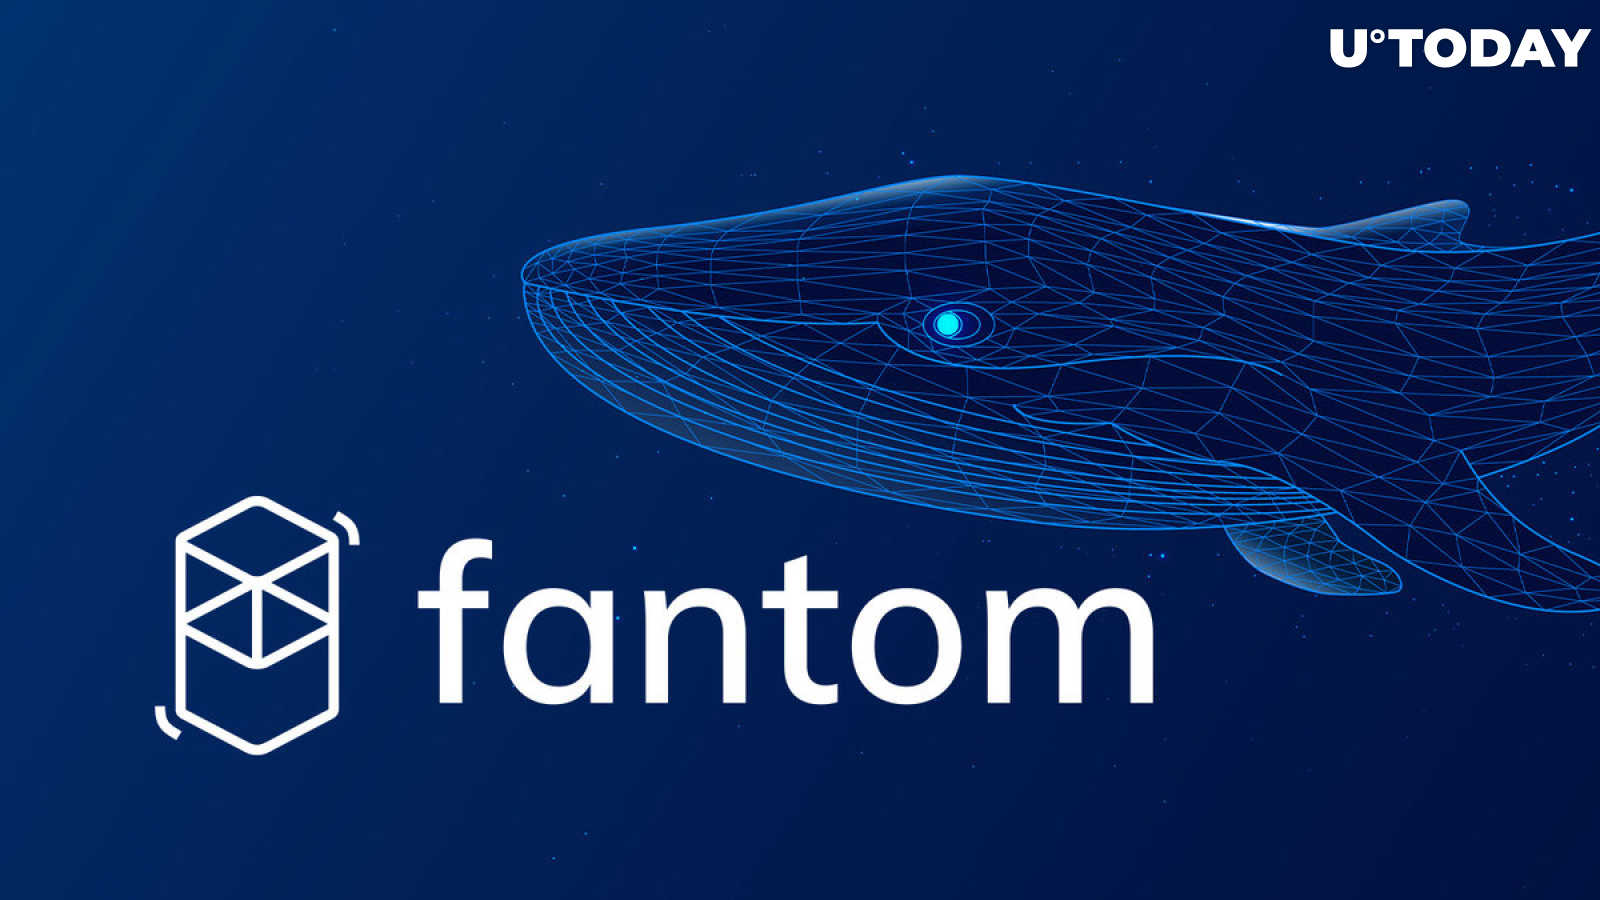 Fantom (FTM) up 11% Amid Whale Dump, Here's Reason